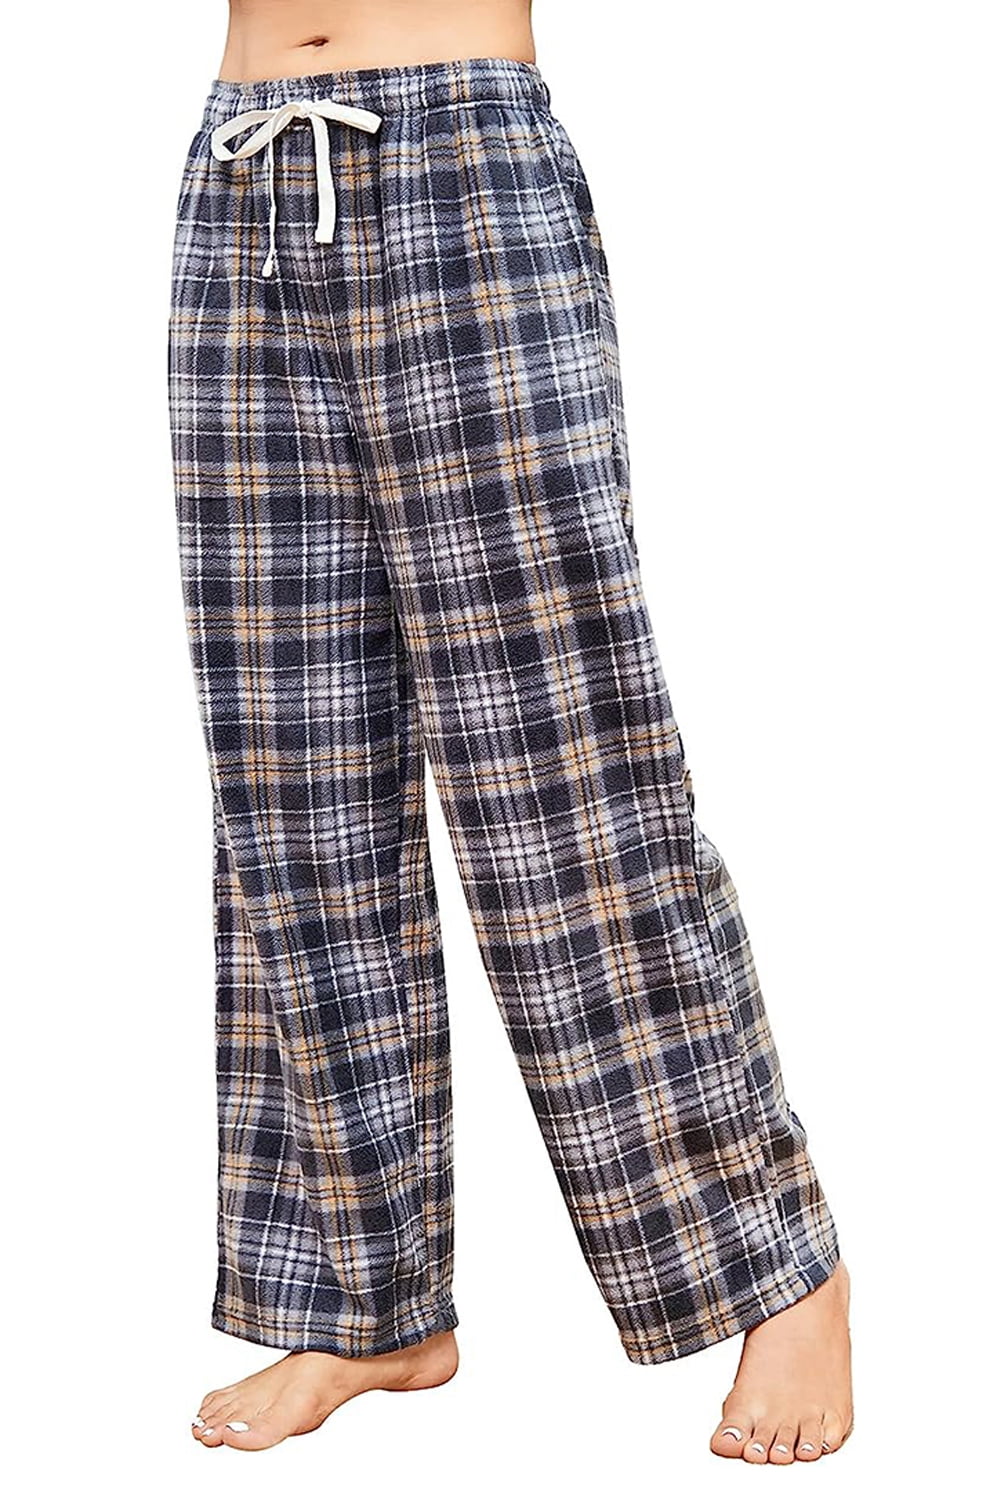 U2SKIIN Women Fleece Pajama Pants, Comfy Plaid PJ Bottoms For Women ...